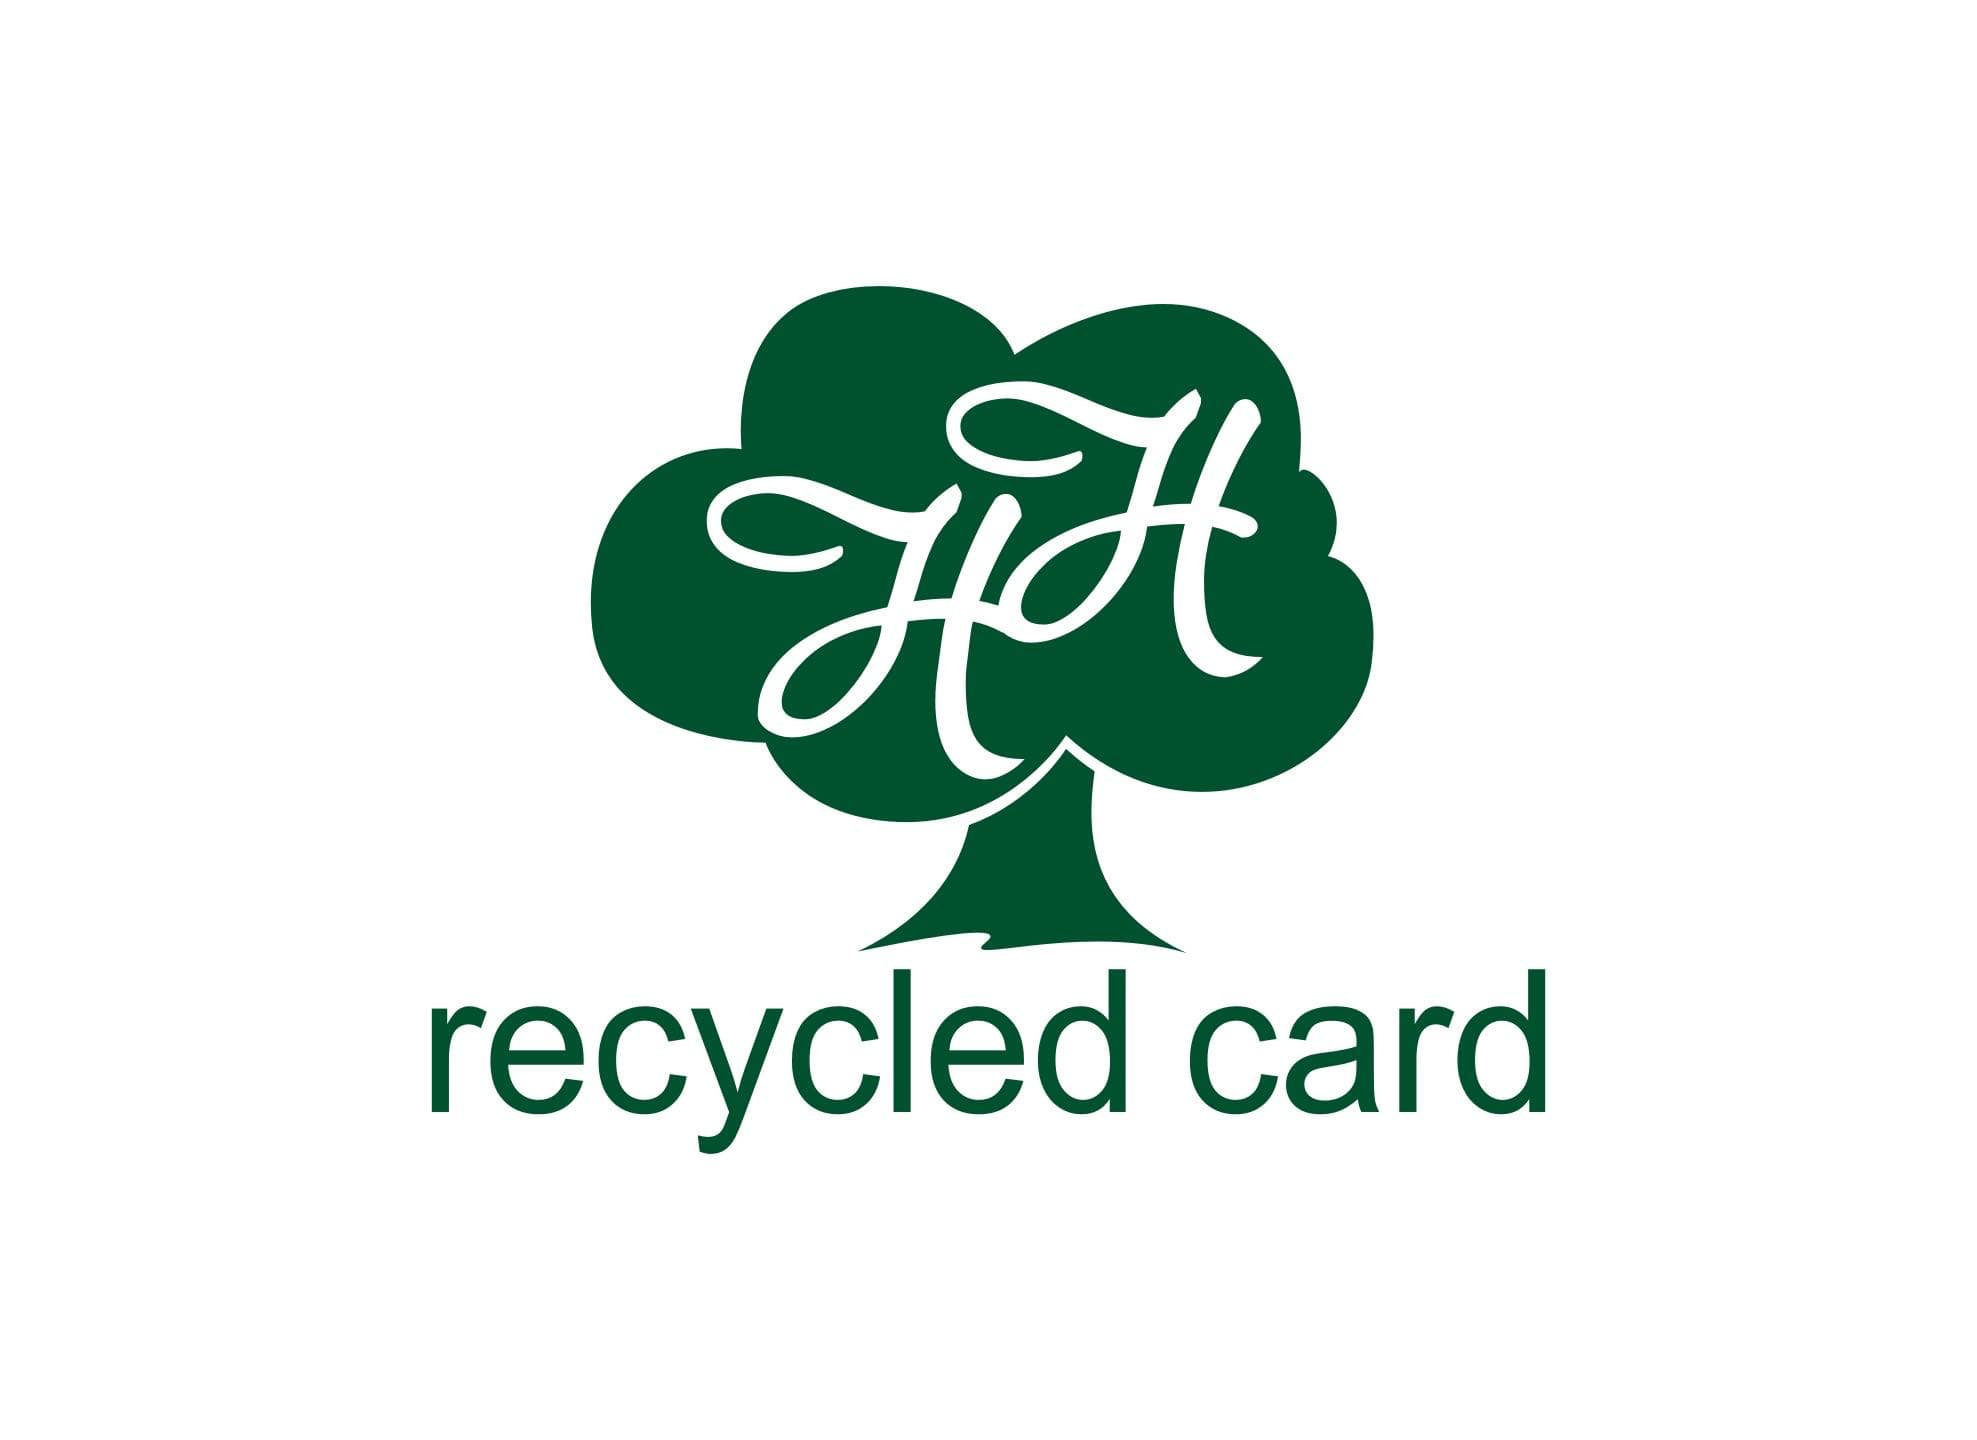 Hua Hong Recycled Card Co., Ltd